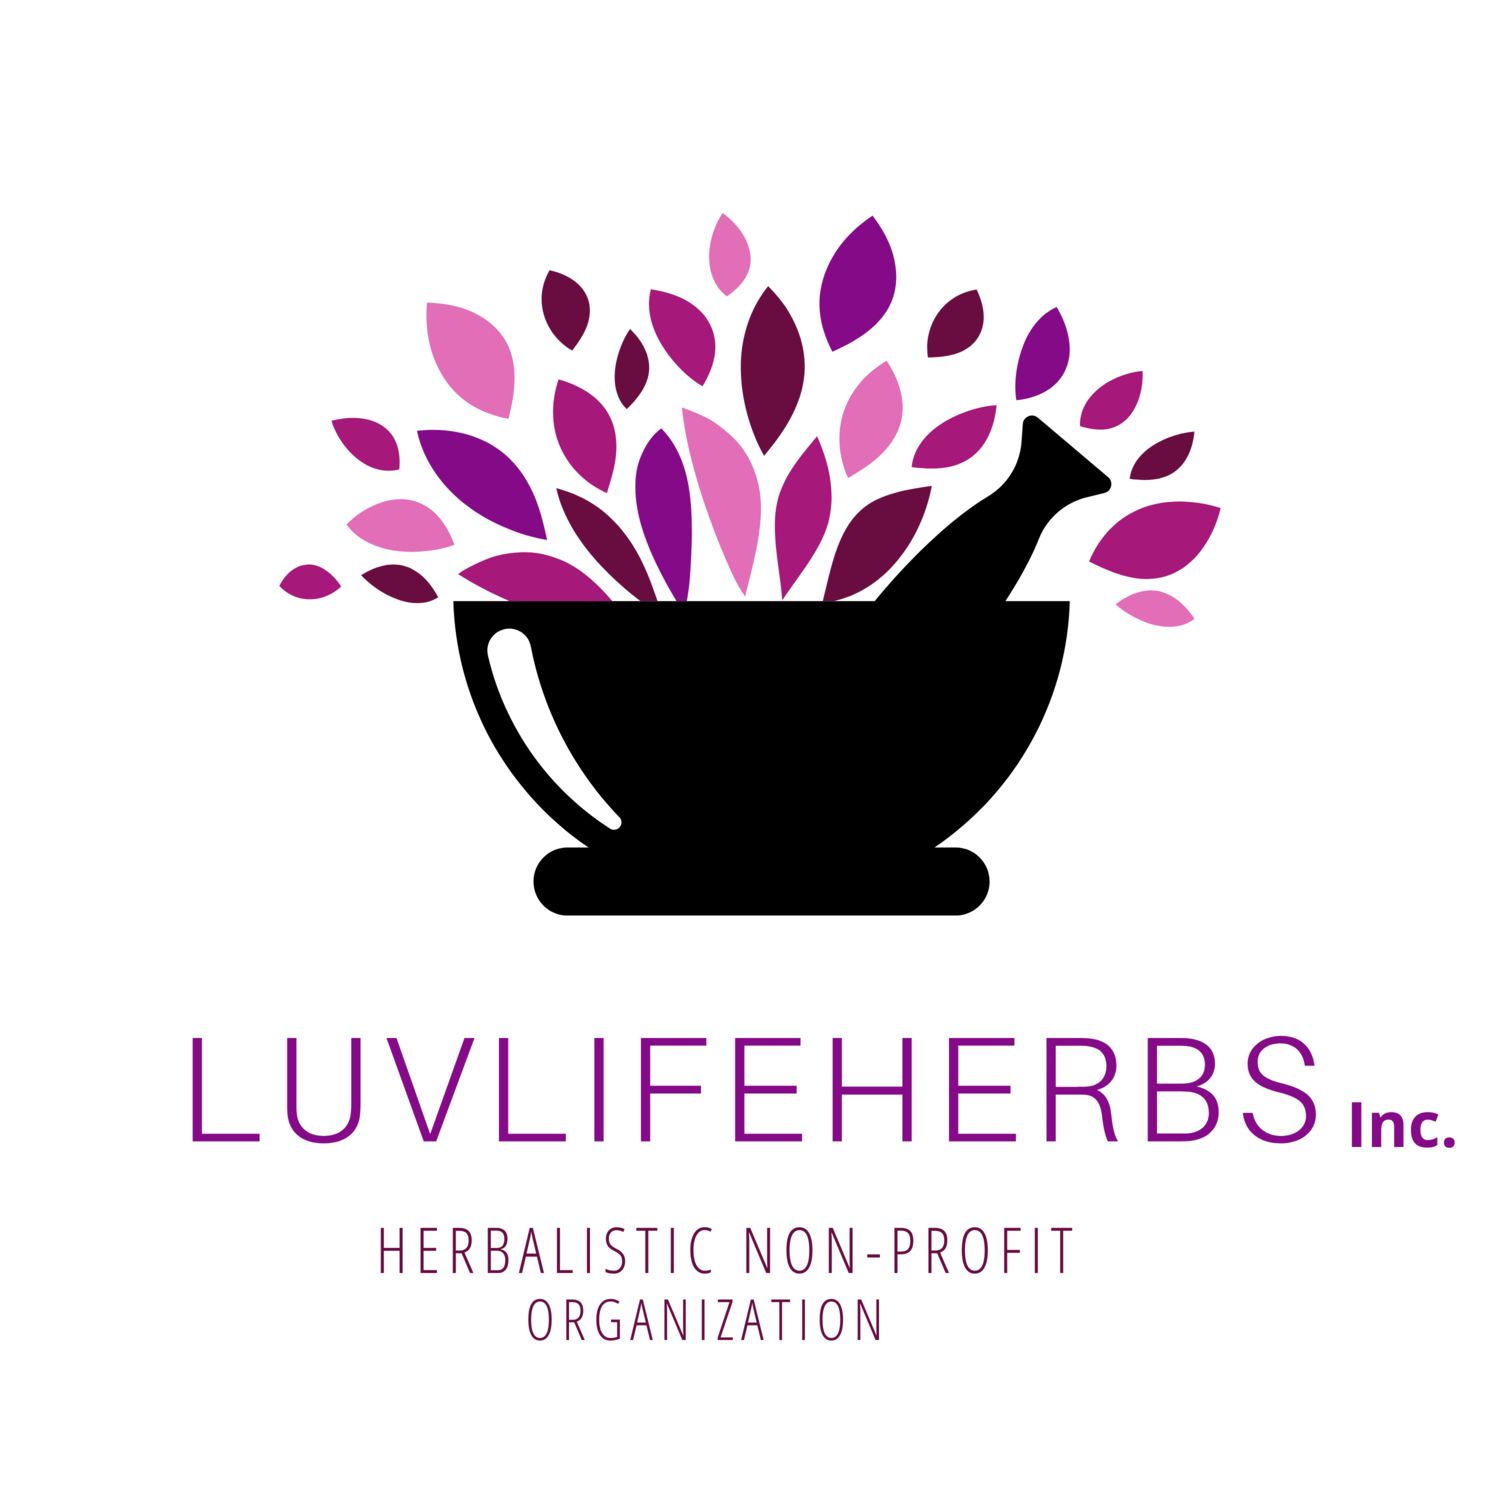 LuvLifeHerbs Inc